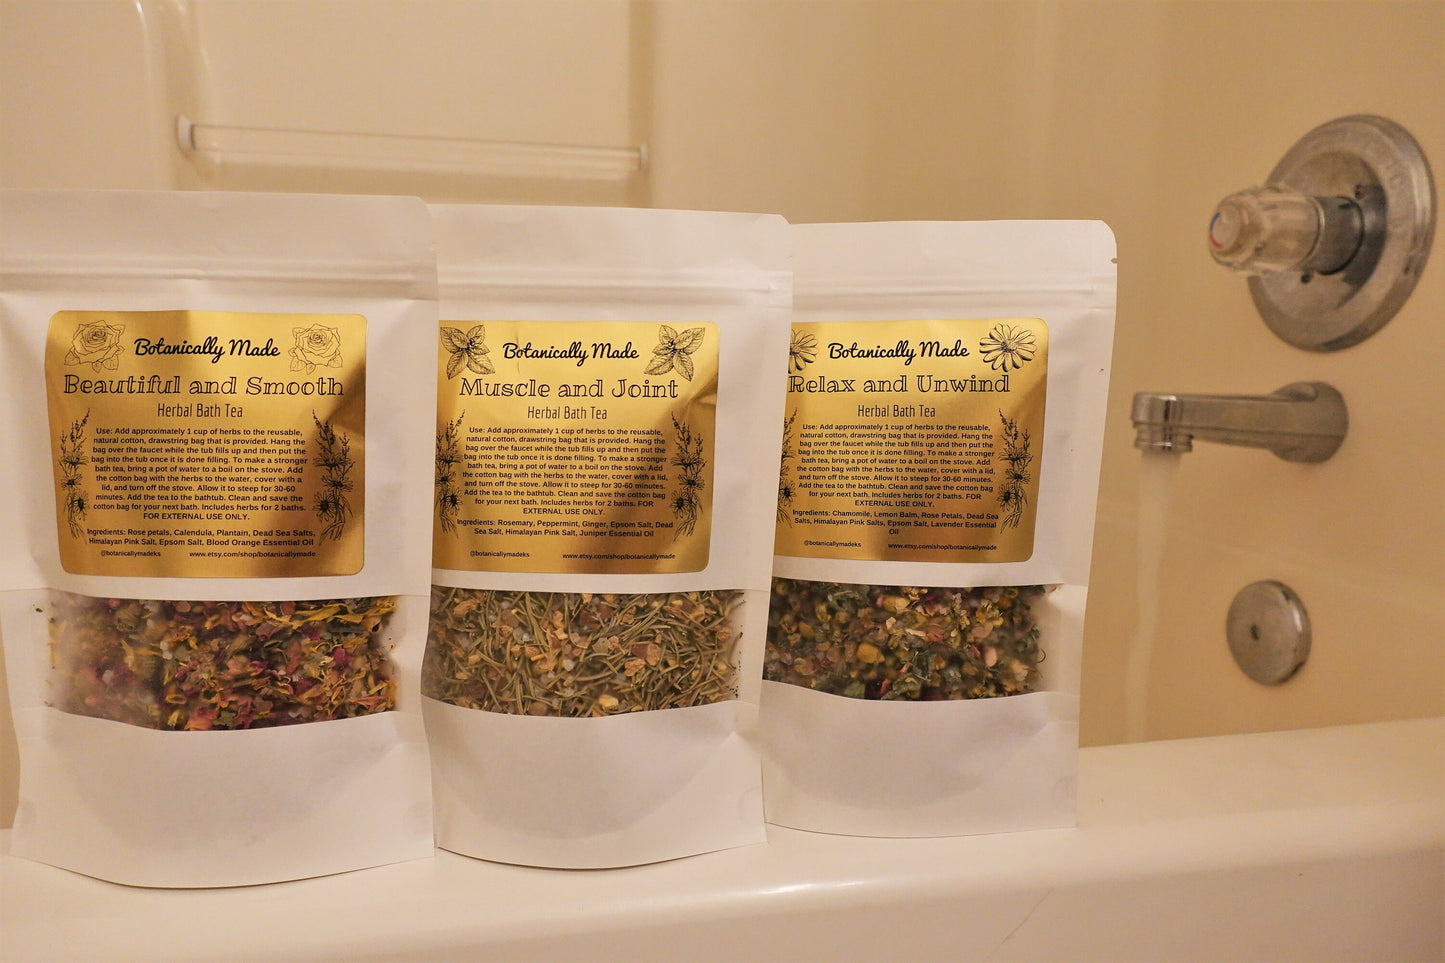 Beautiful and Smooth Herbal Bath Tea and Salt